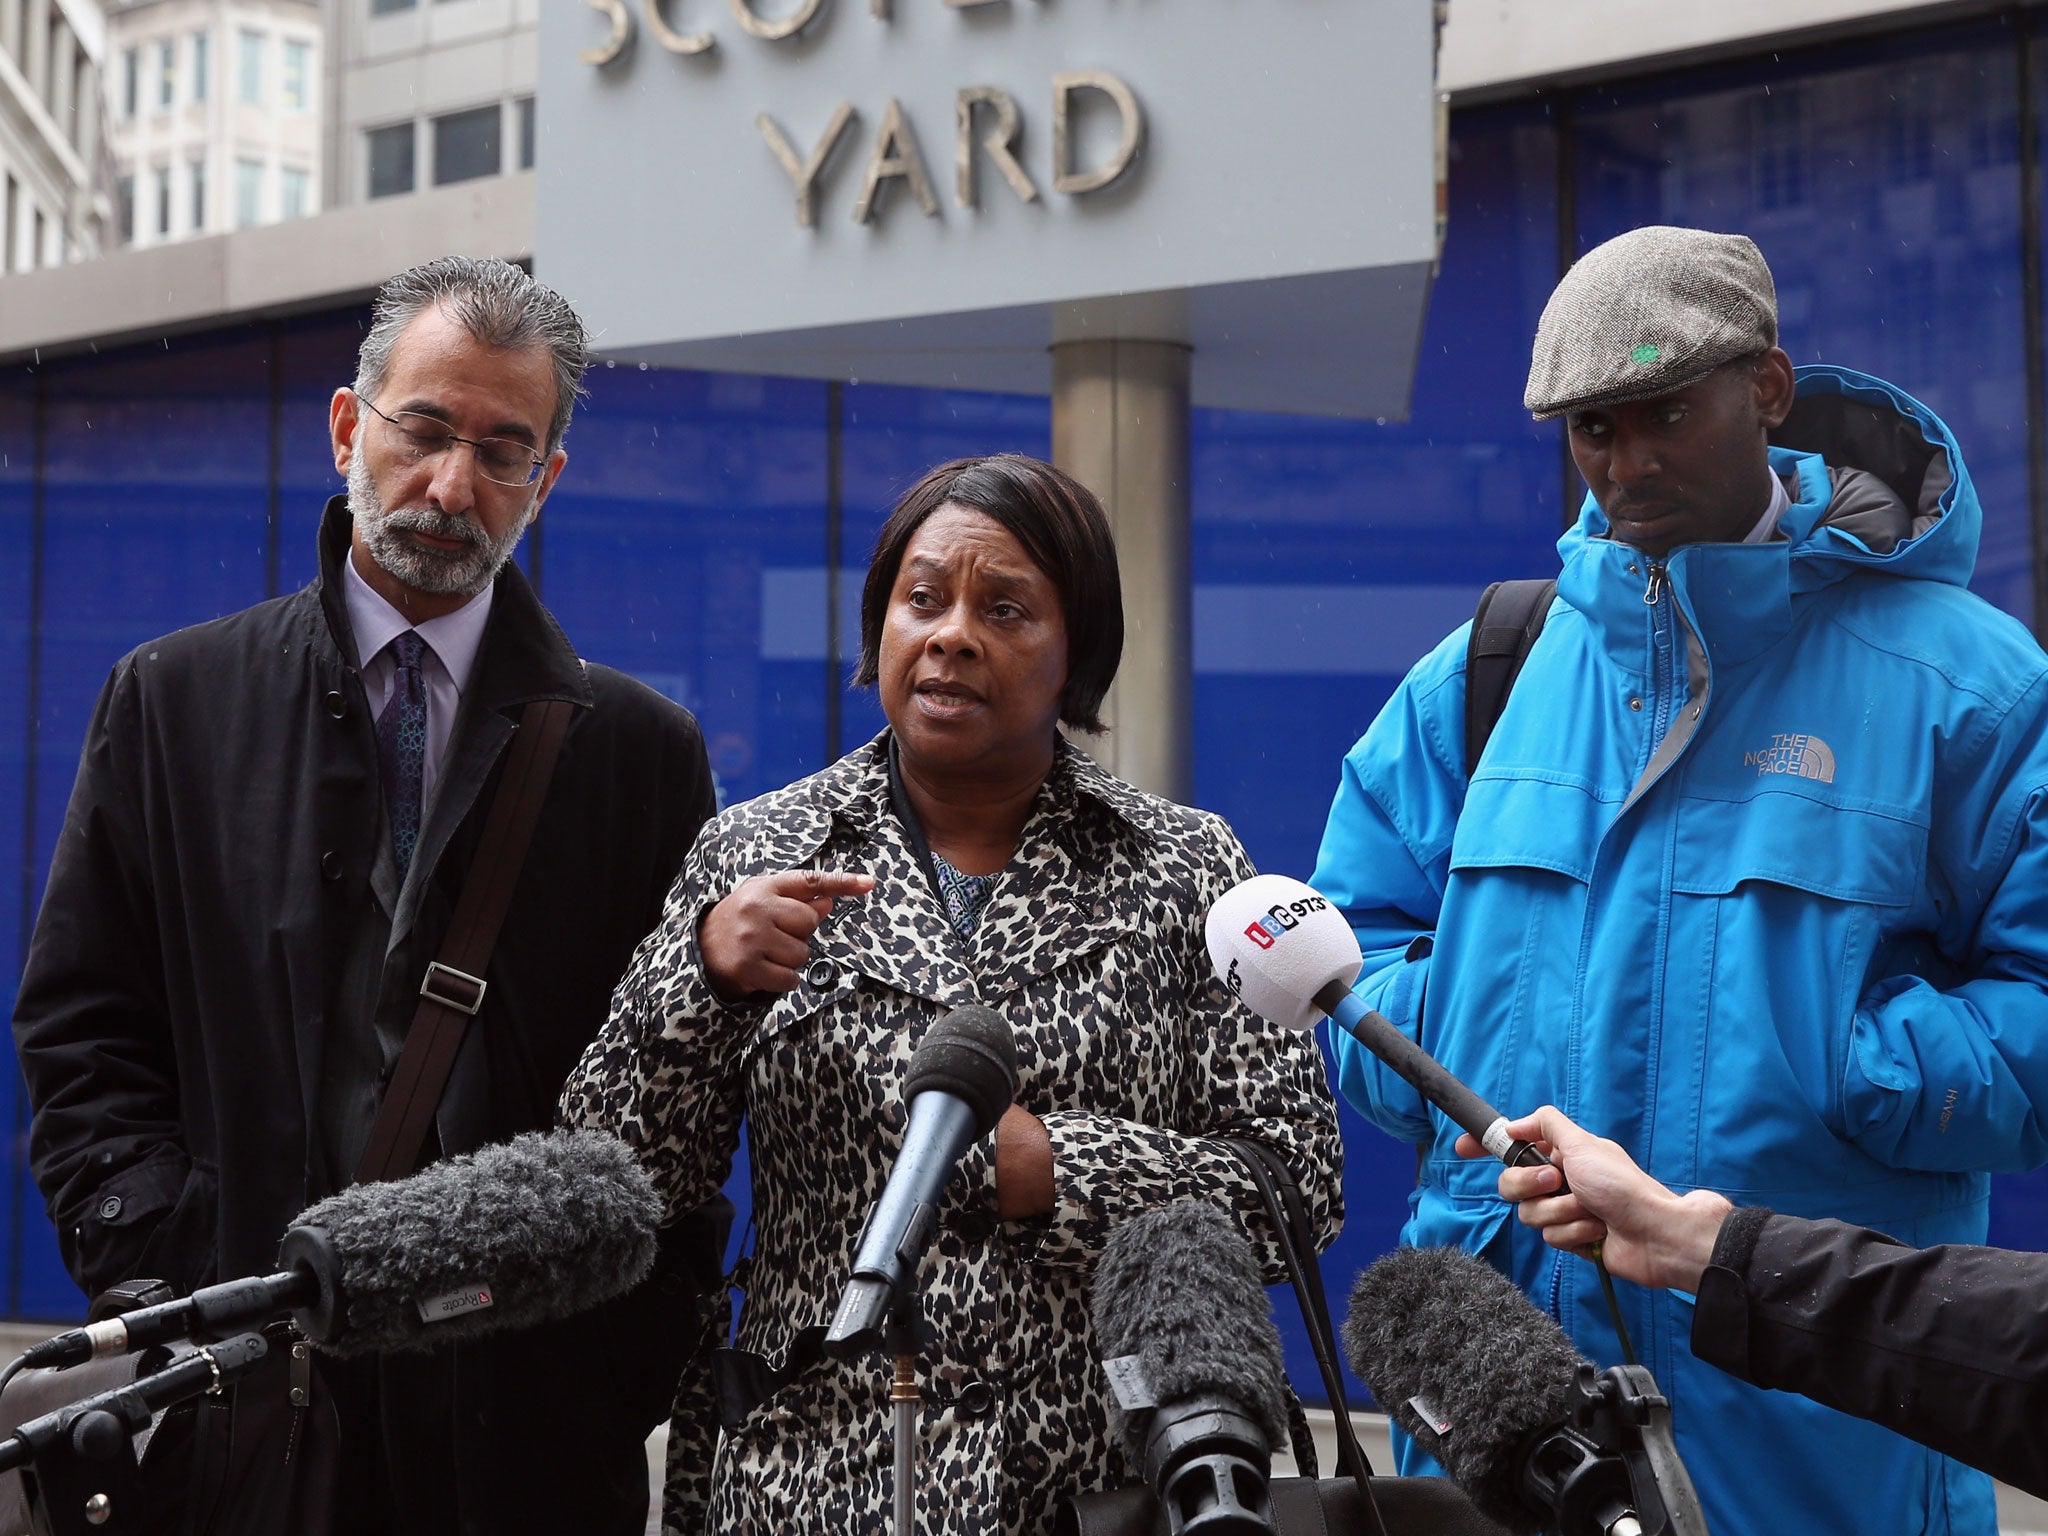 Doreen Lawrence speaking at Scotland Yard last week